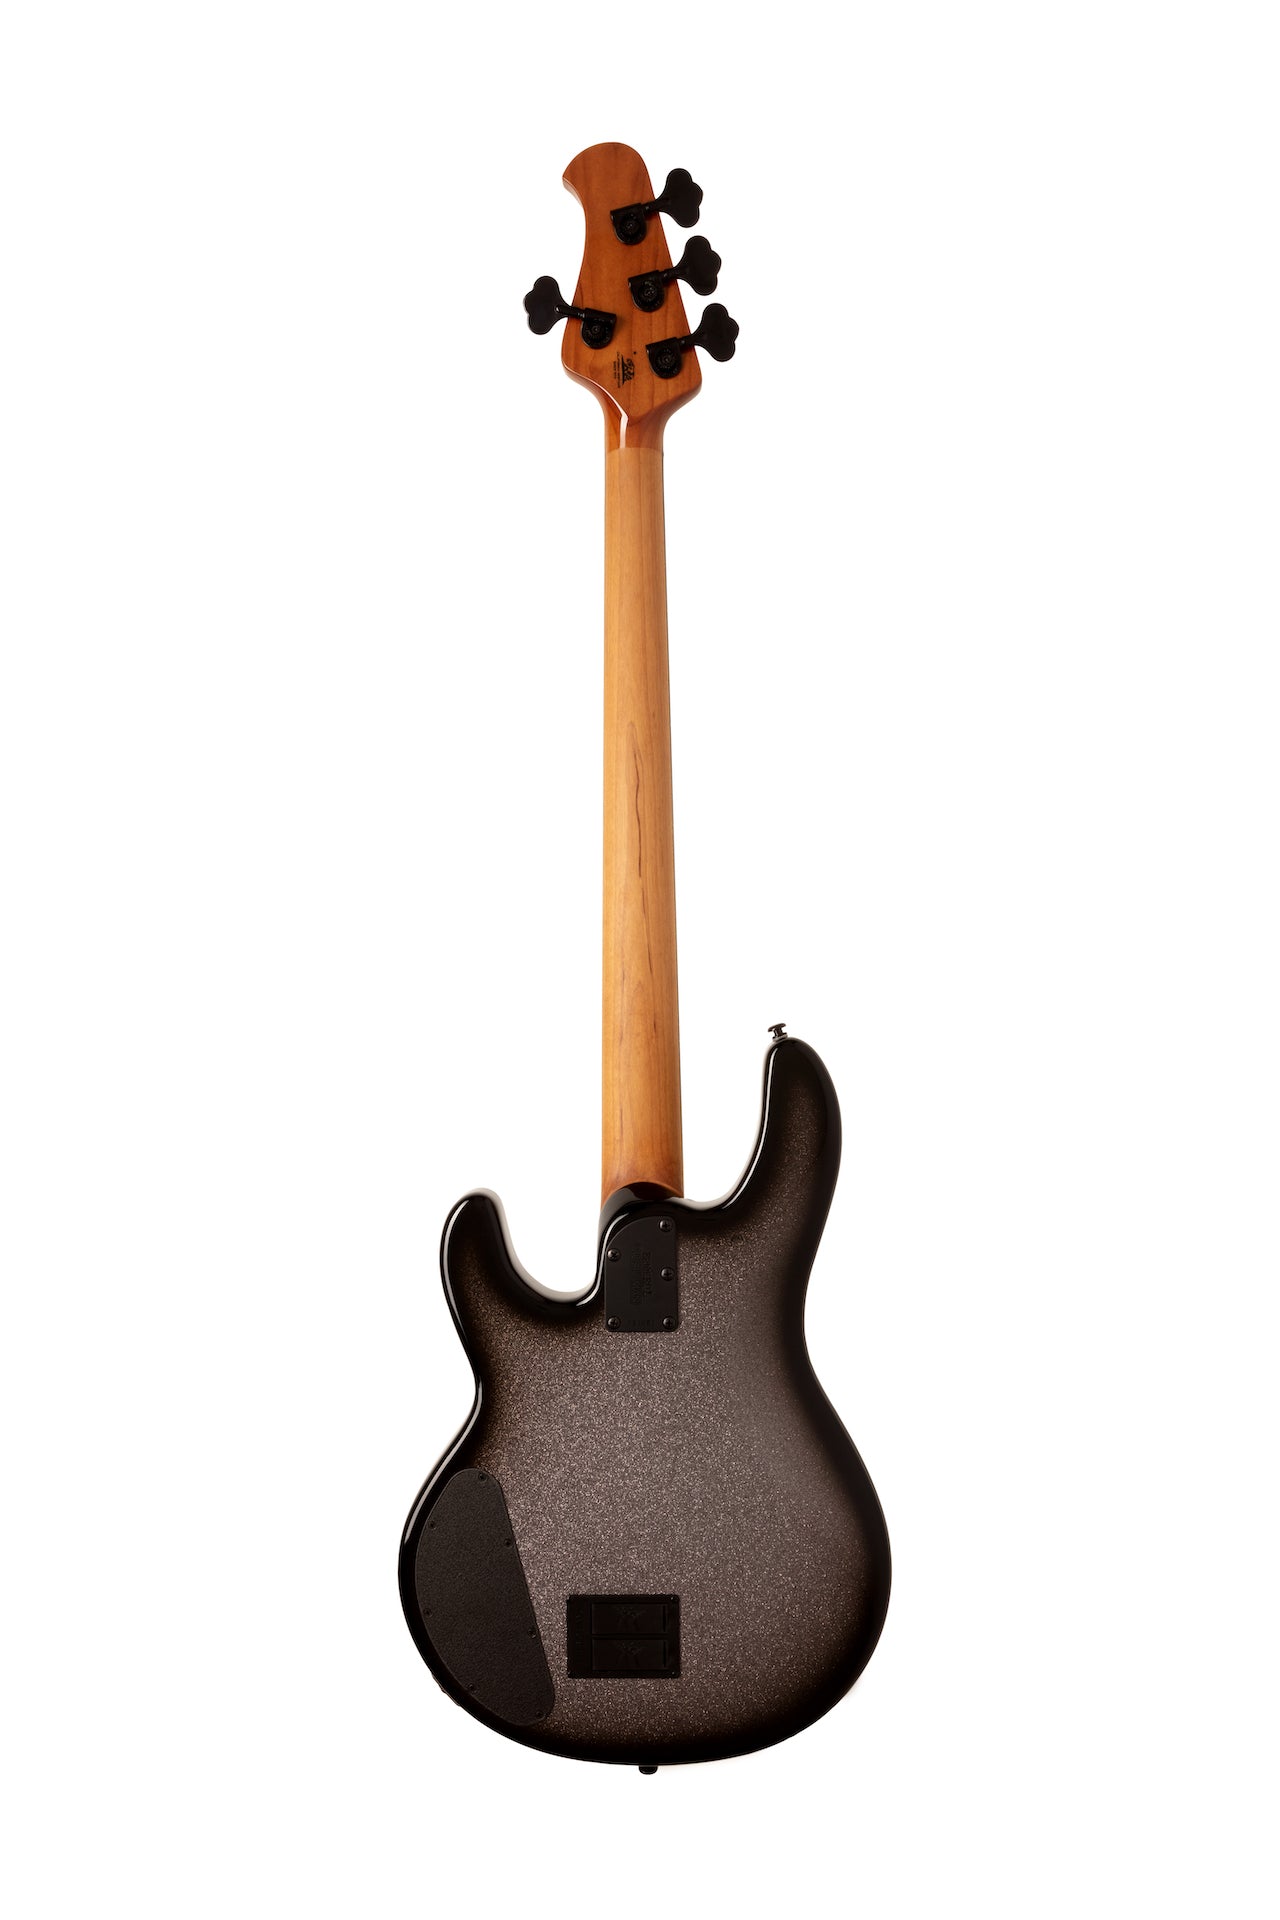 Ernie Ball Music Man StingRay Special 4 HH Bass Guitar - Smoked Chrome with Ebony Fingerboard F95176 - HIENDGUITAR   Musicman bass